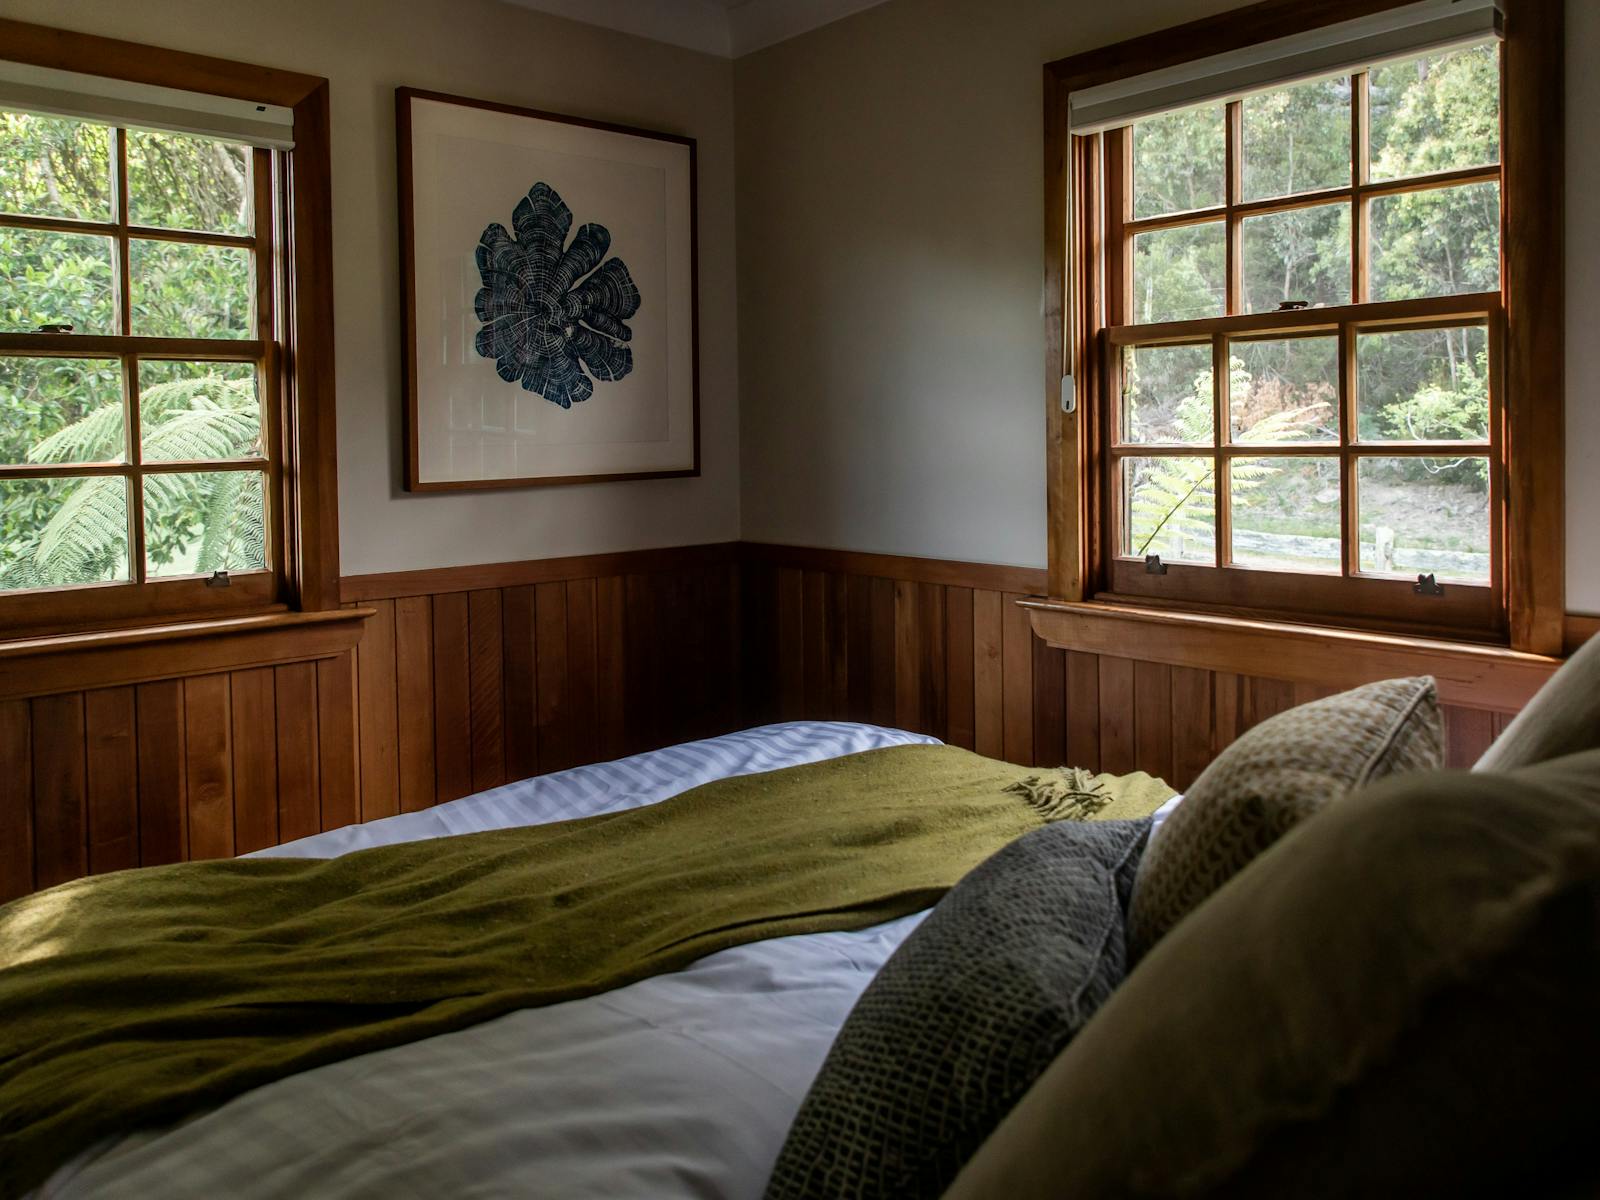 Master bedroom with dappled light